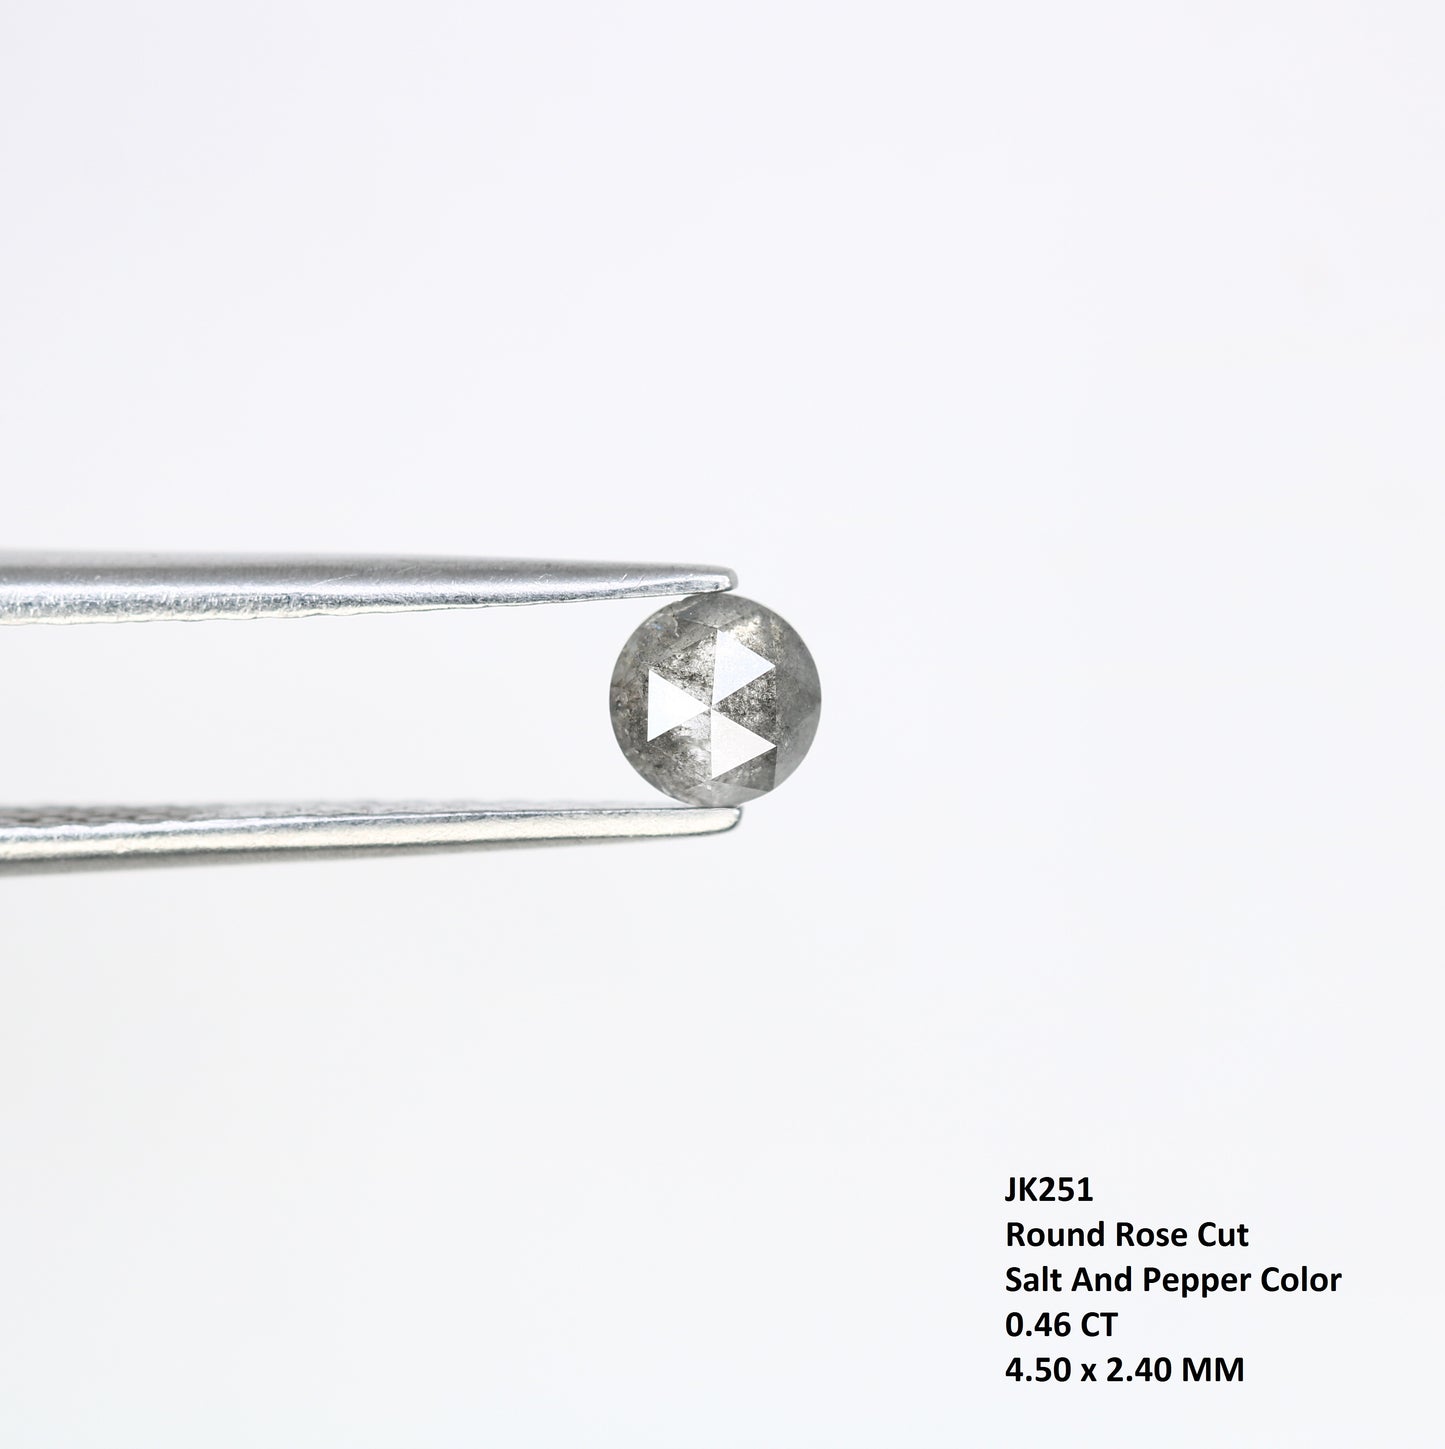 Salt And Pepper Round Rose Cut 0.46 CT 4.50 MM Diamond For Designer Ring